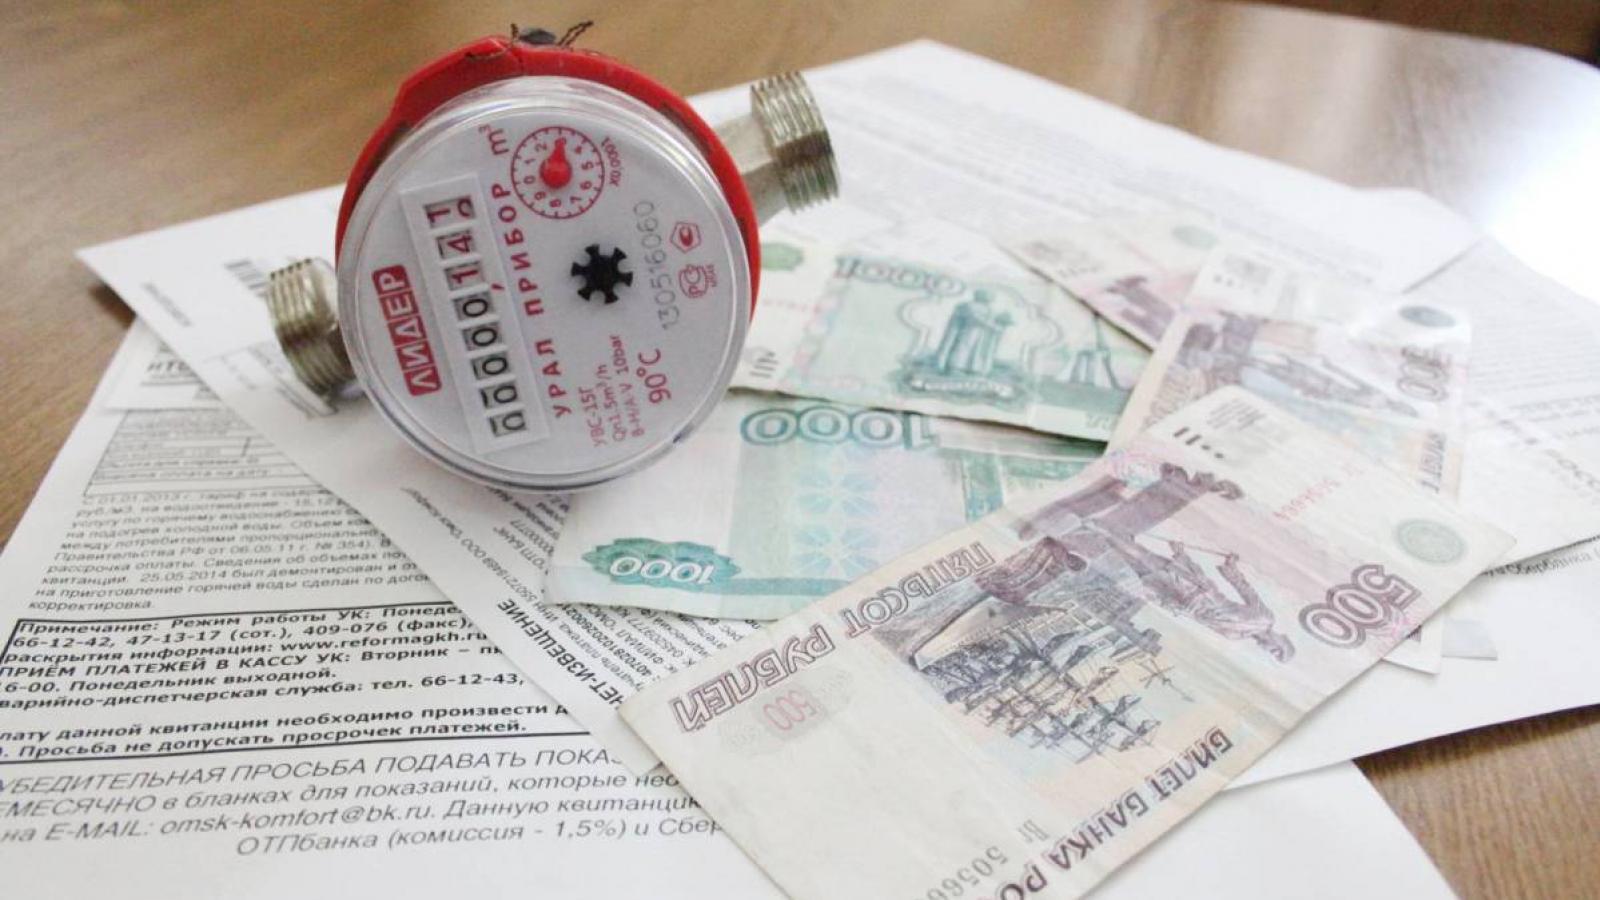 Вологжане задолжали более 1,3 млрд руб. за услуги ЖКХ